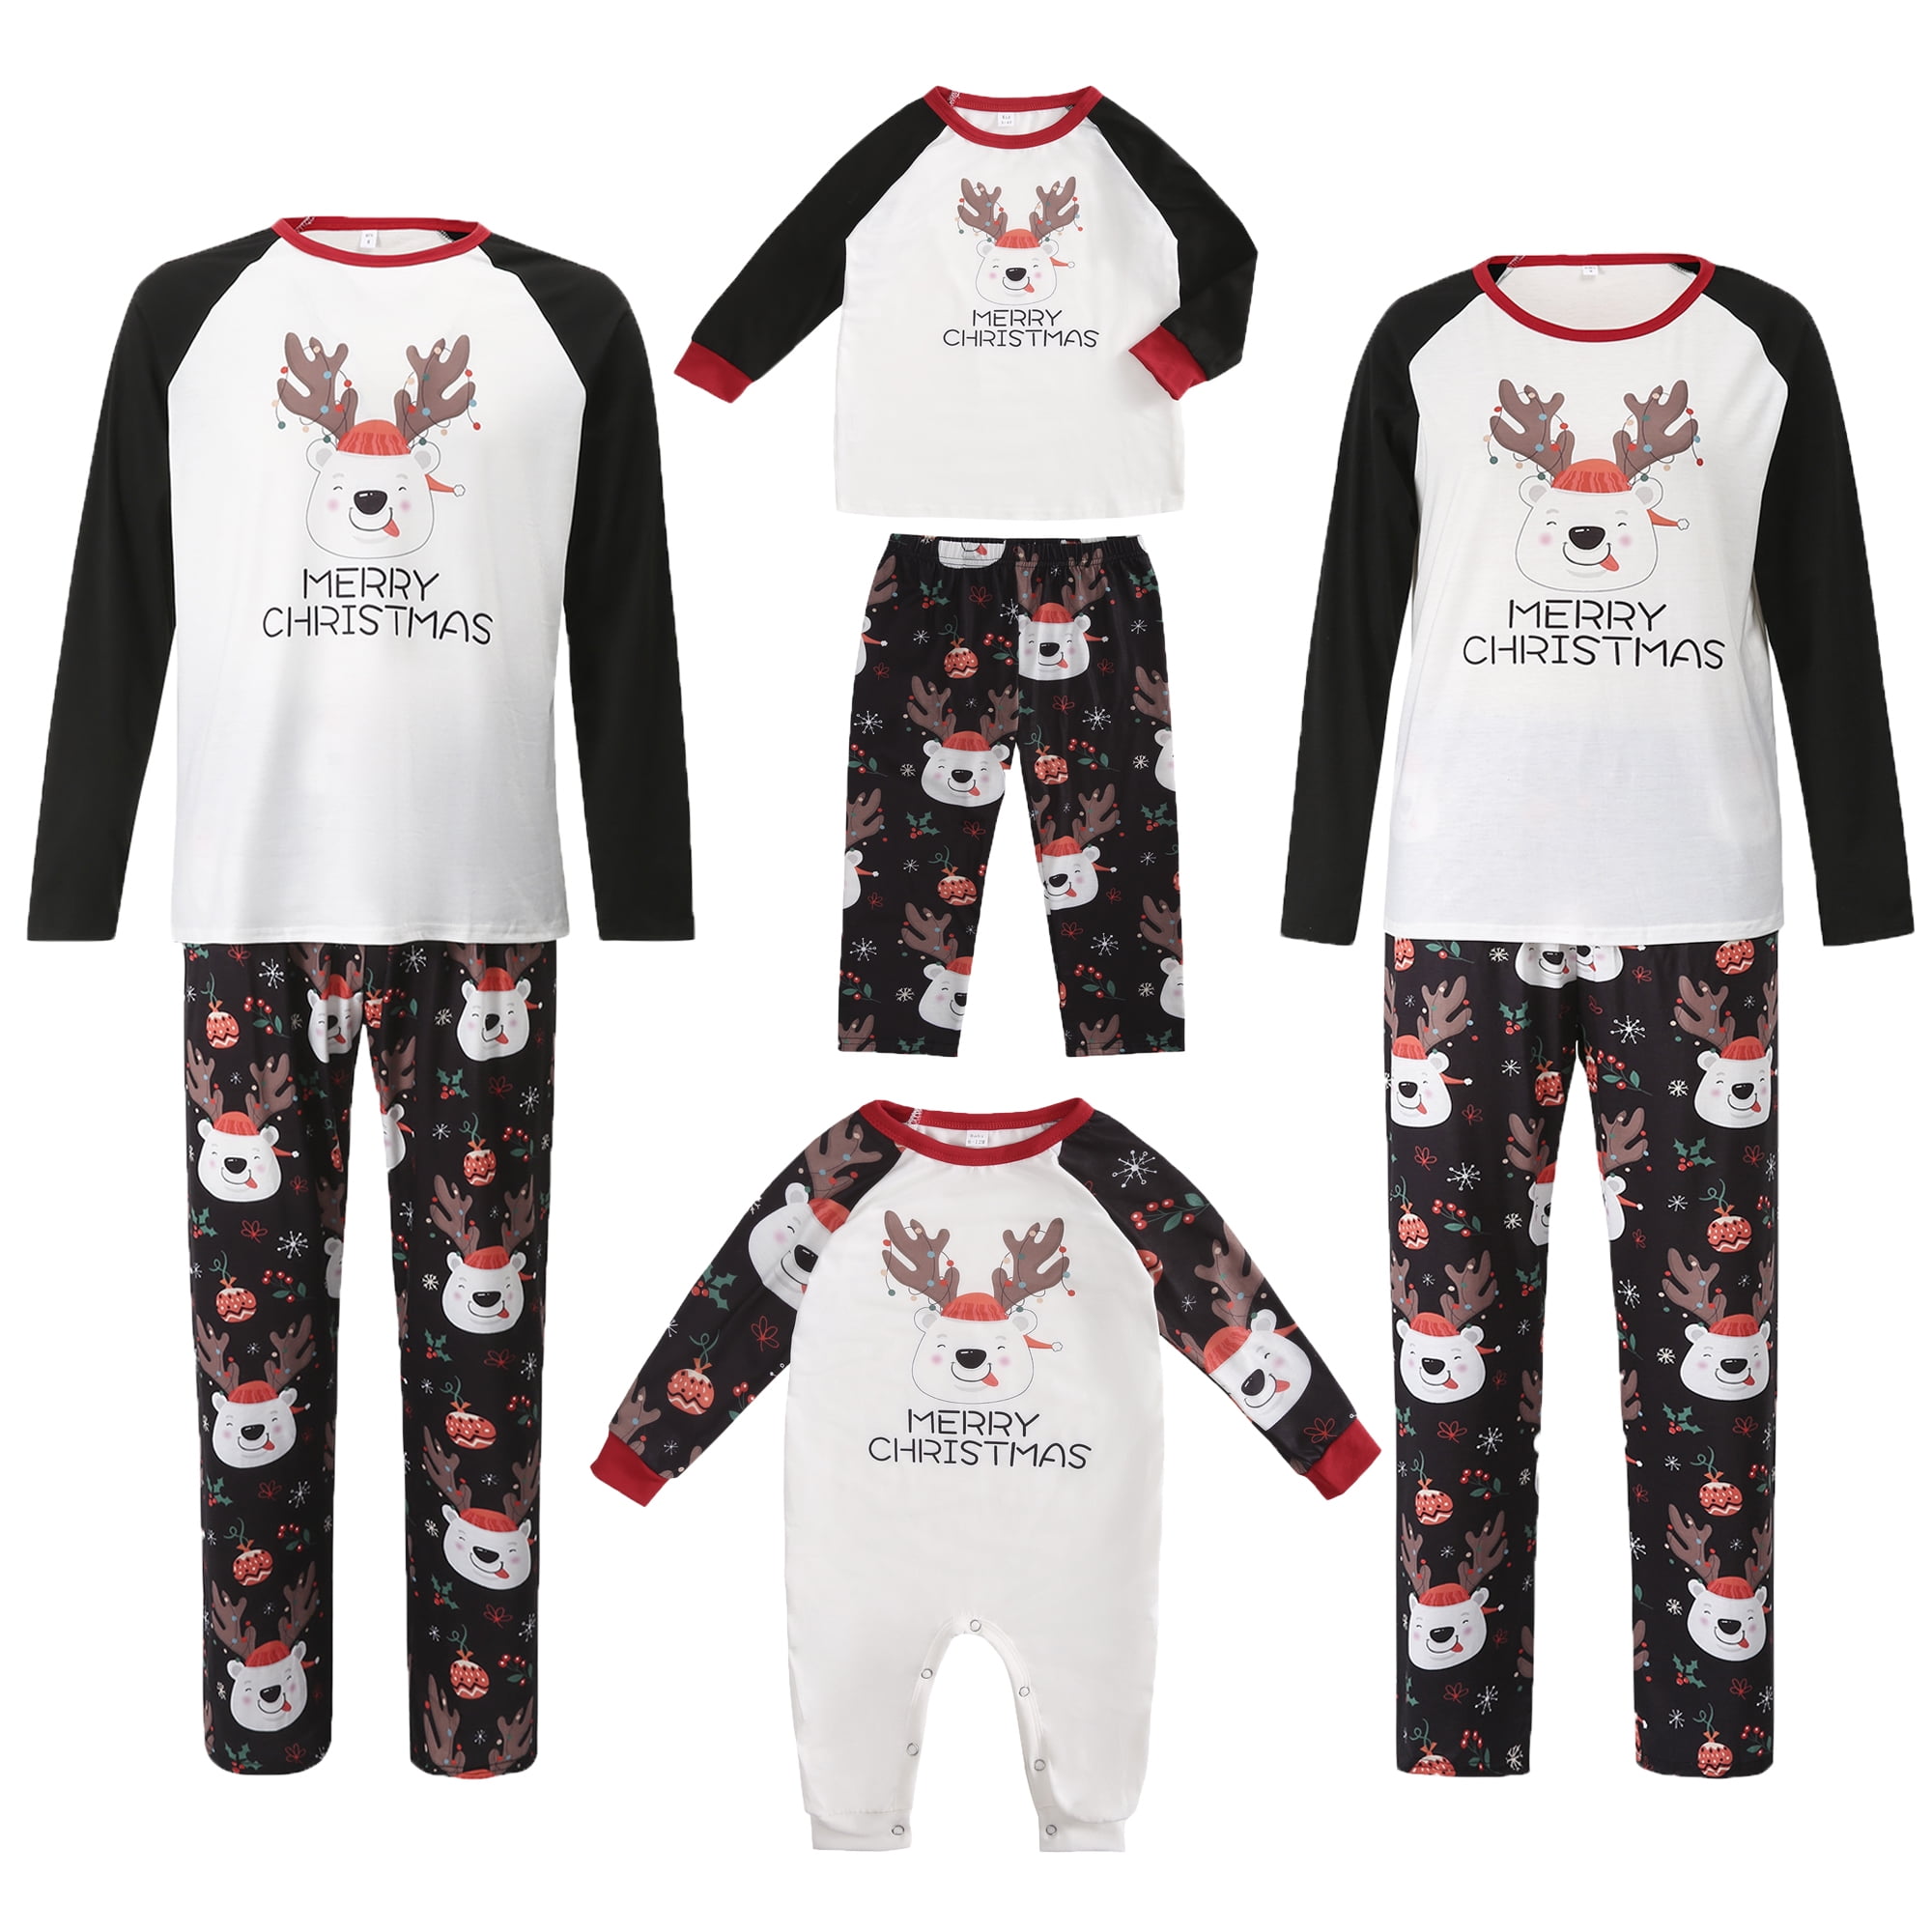 Shuttle tree Family Matching Christmas Pajamas Plus Size Xmas Pjs Set ...